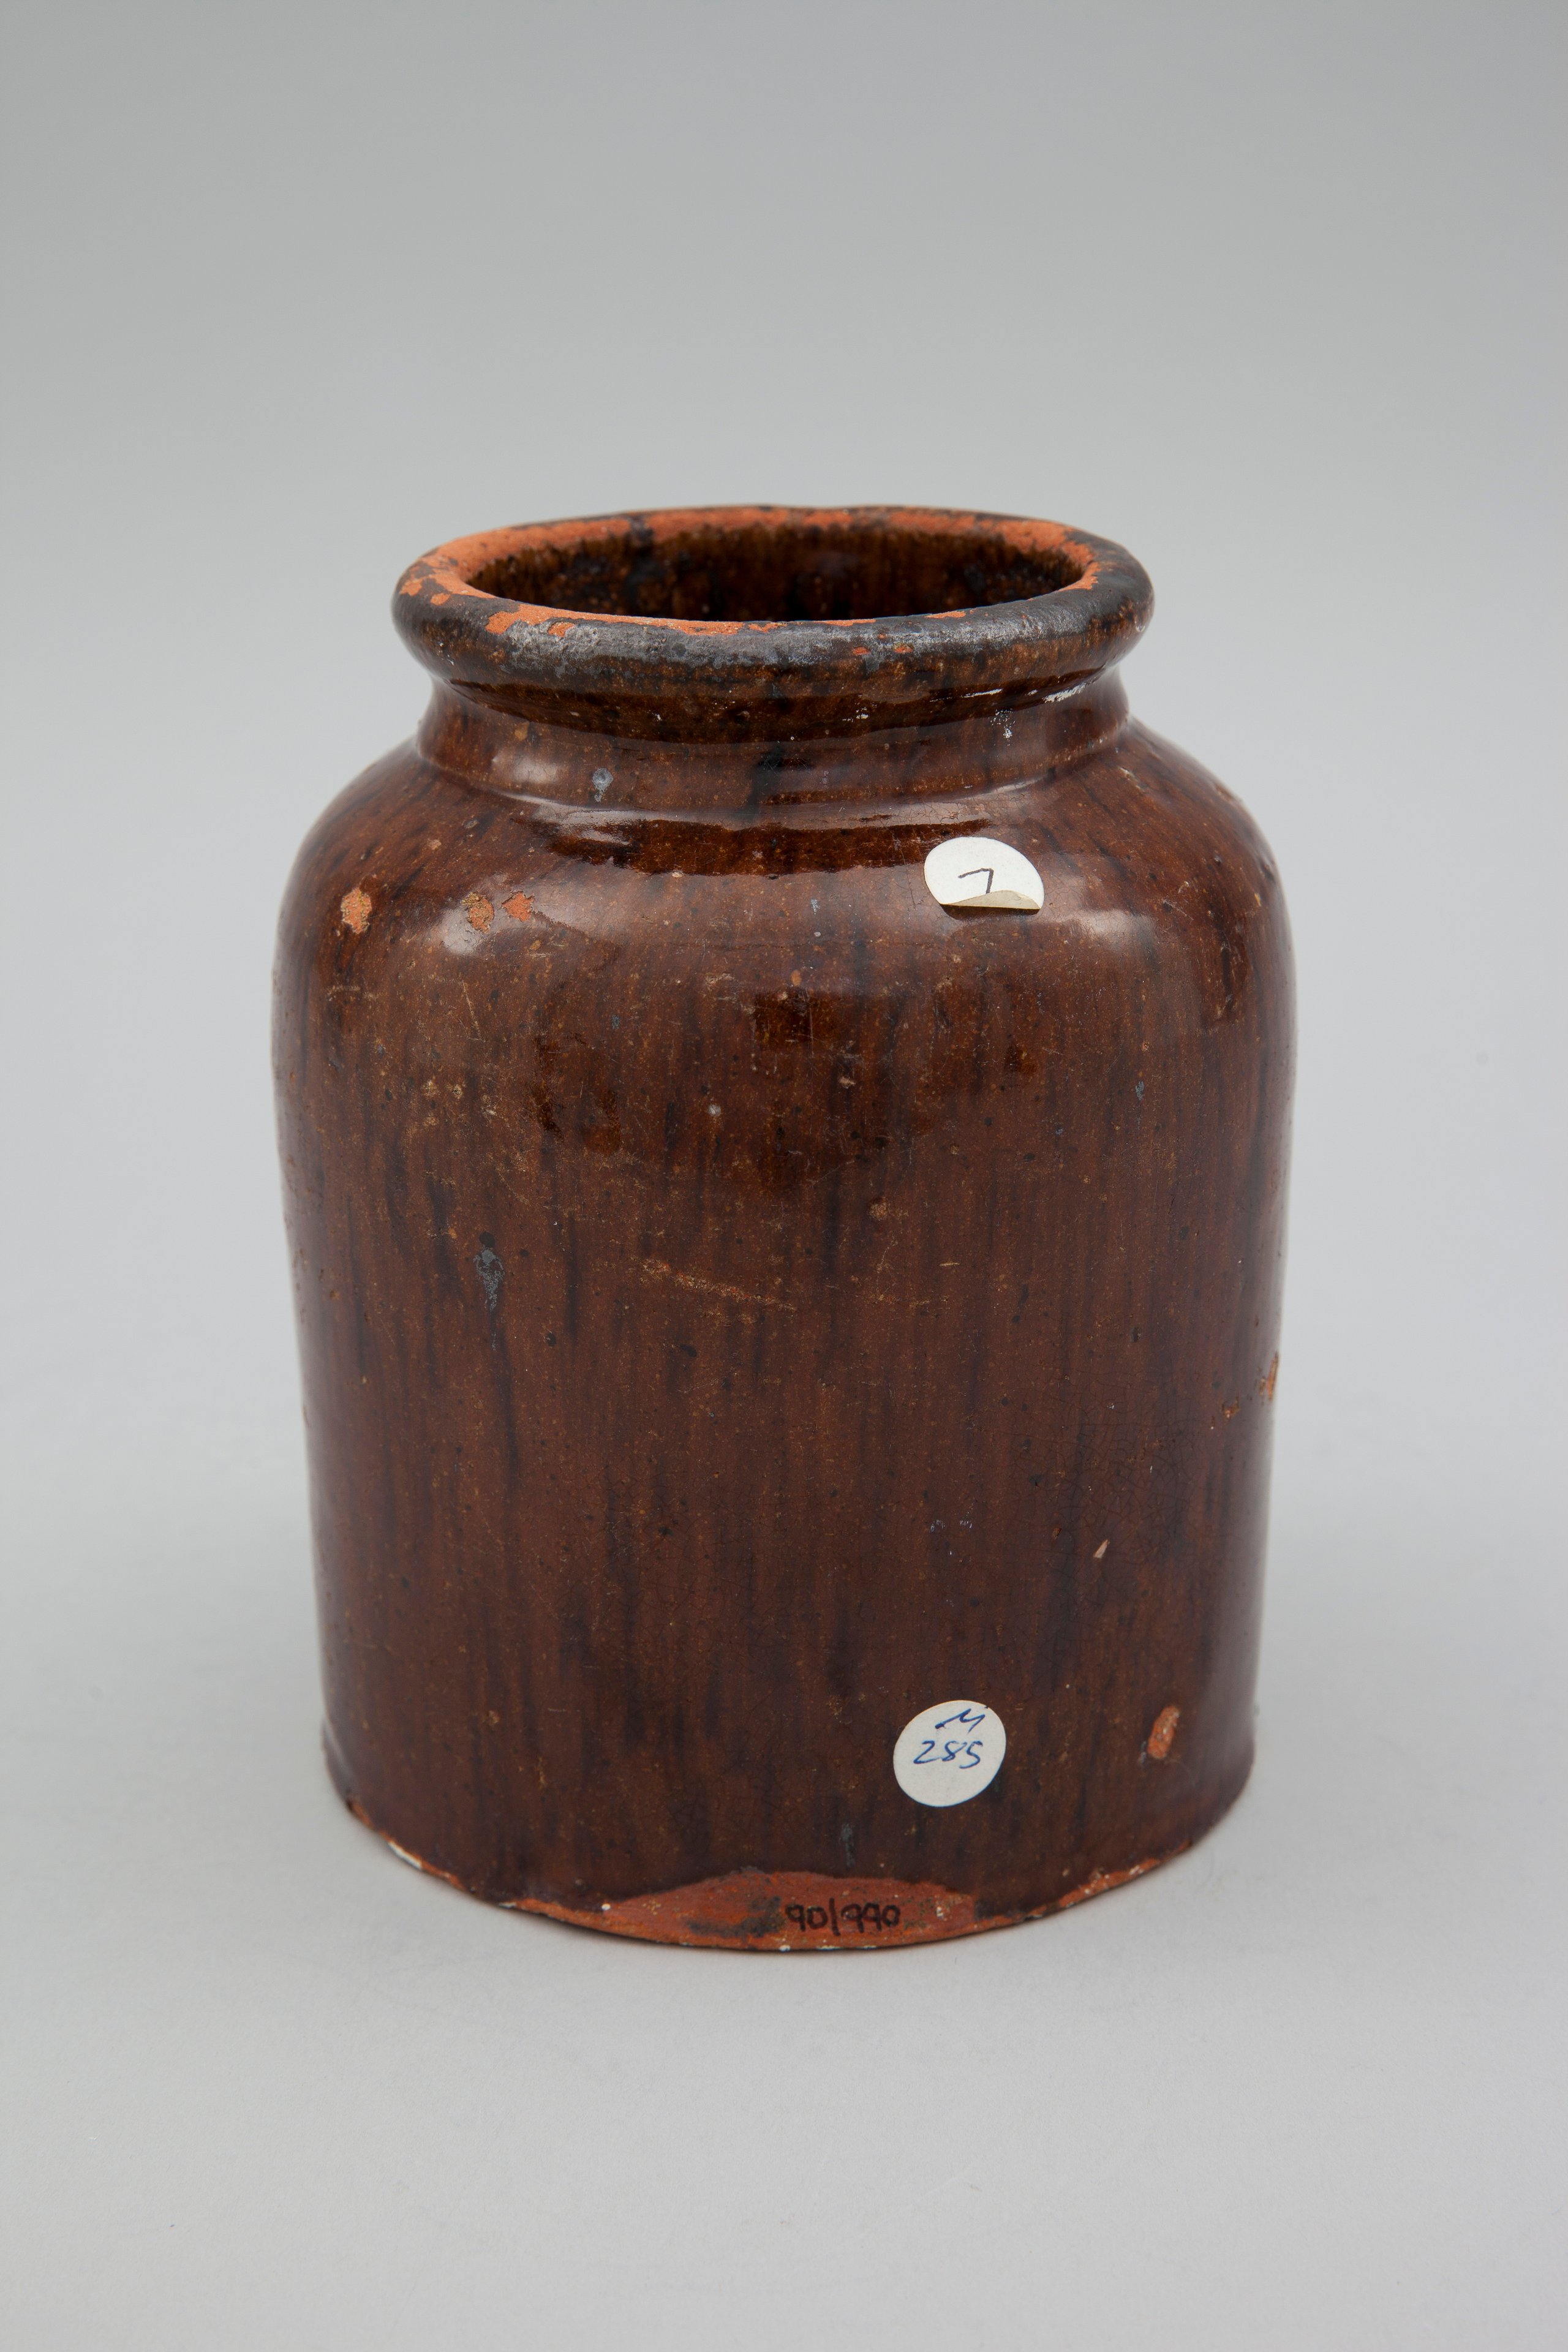 Earthenware jar made by J G S Hoffmann